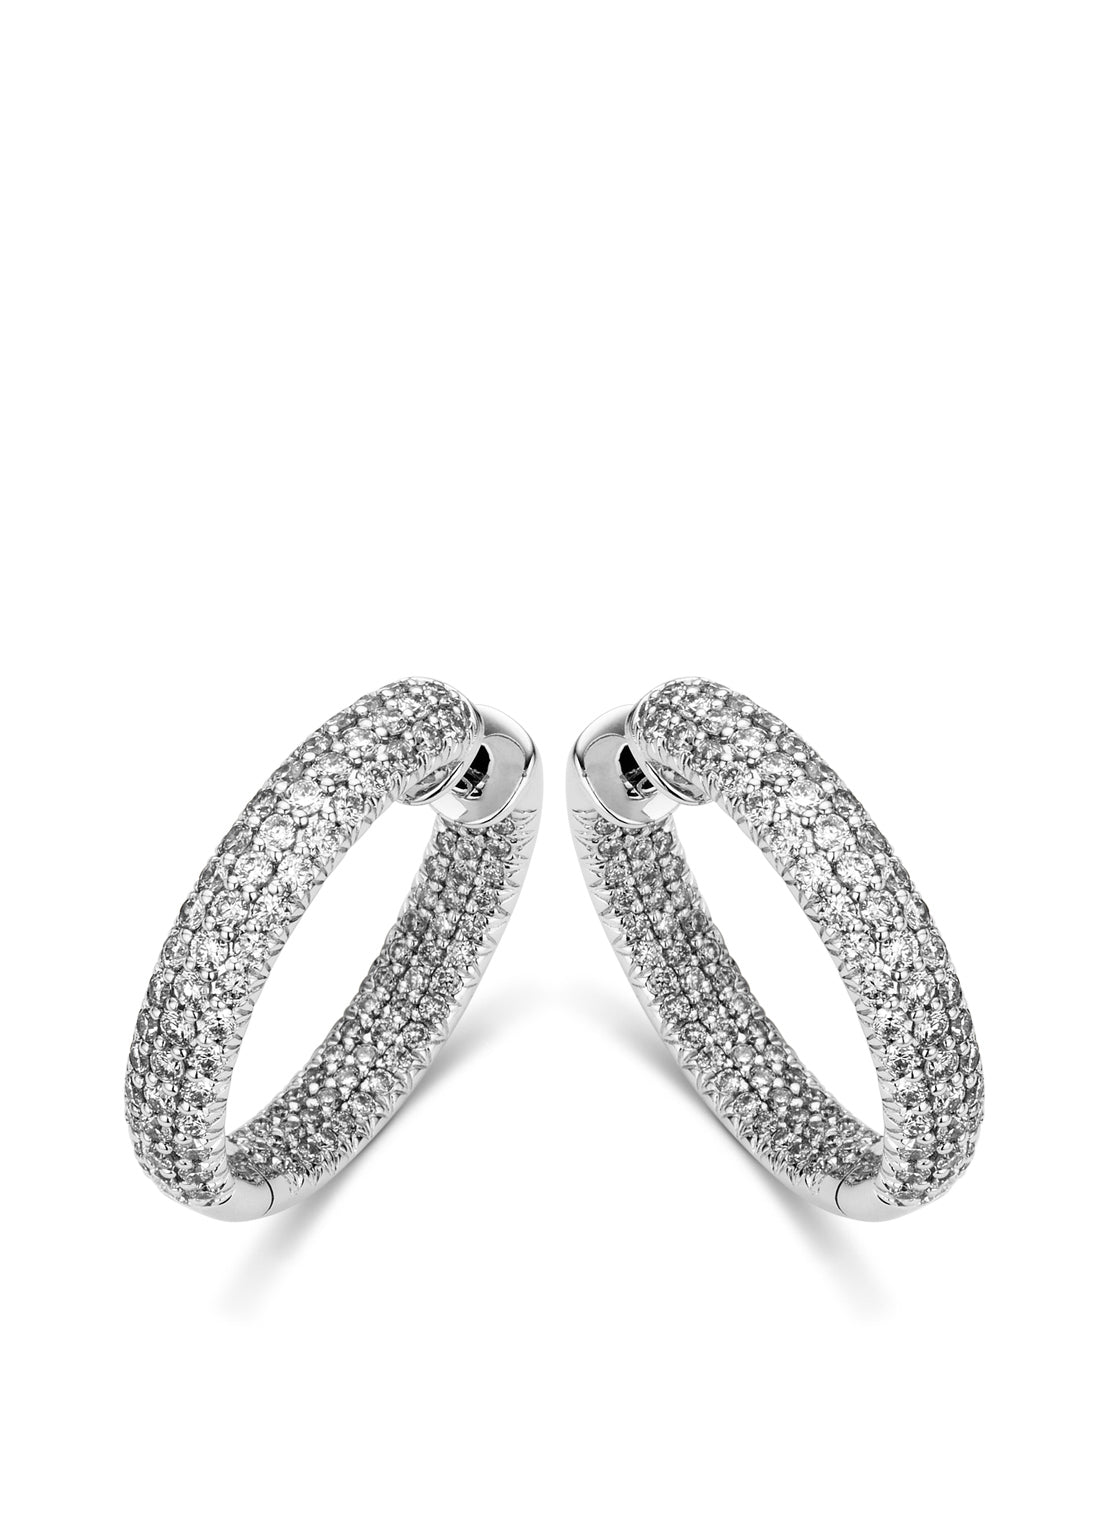 White gold ear jewelry, 2.22 ct diamond, caviar